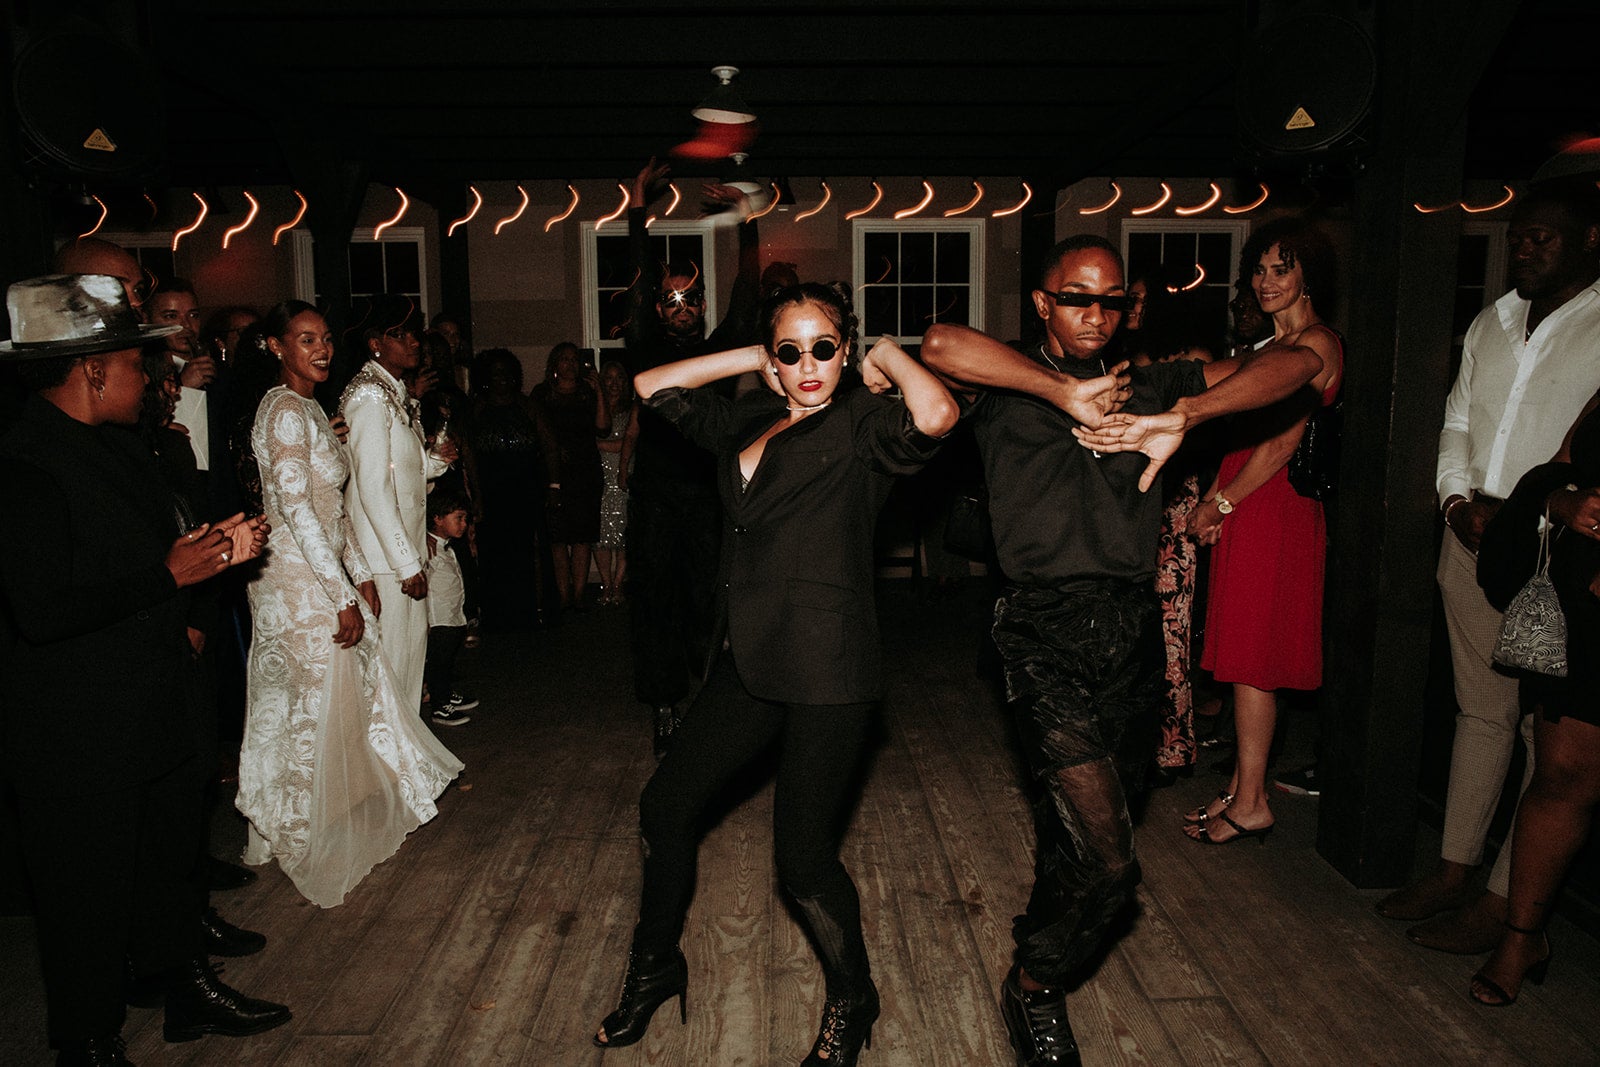 Bridal Bliss: Kris And Talisa Made Magic At Their Woodsy New York Wedding